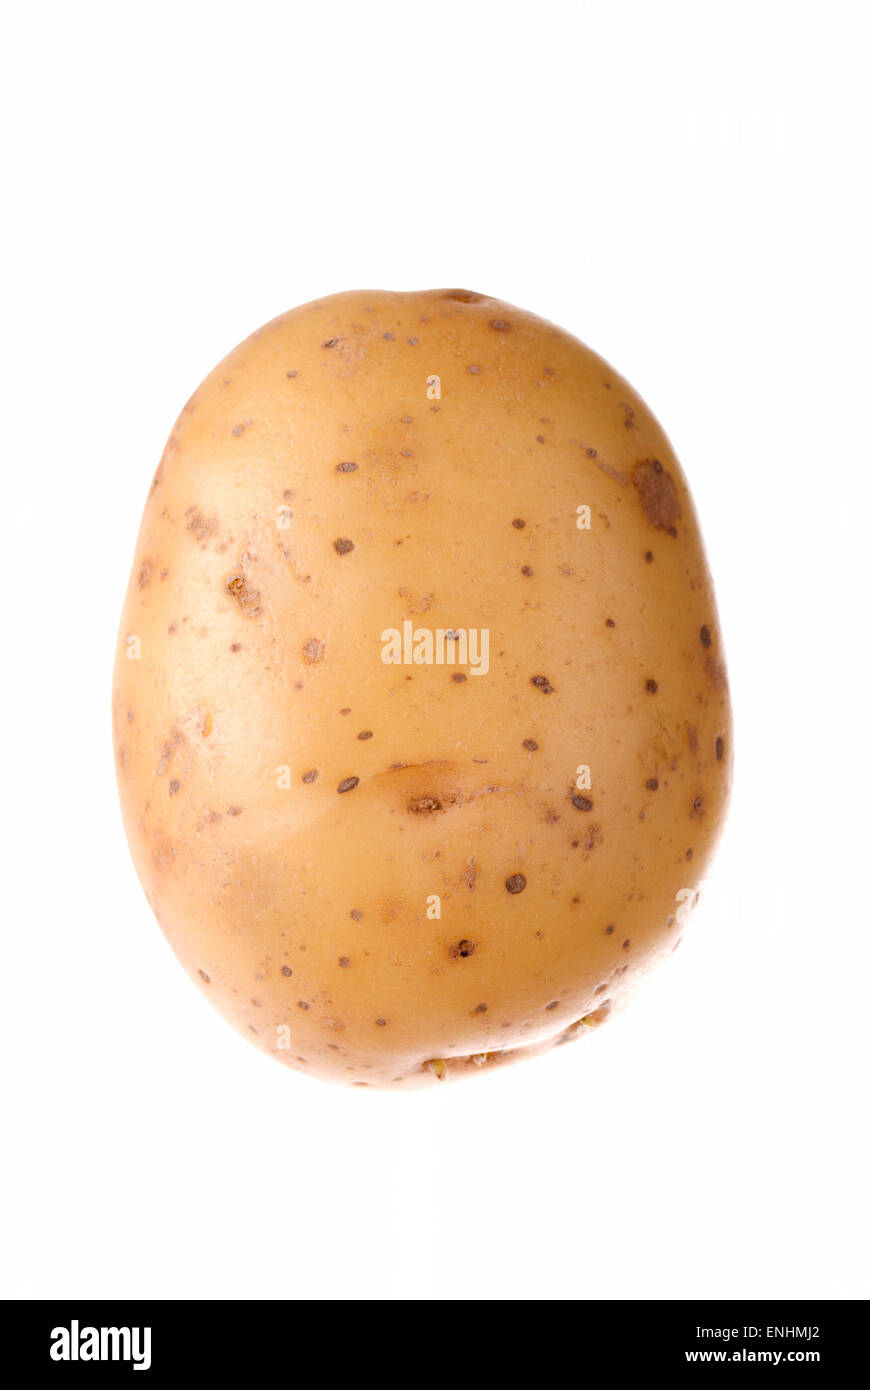 One raw potato on white background close up. Stock Photo